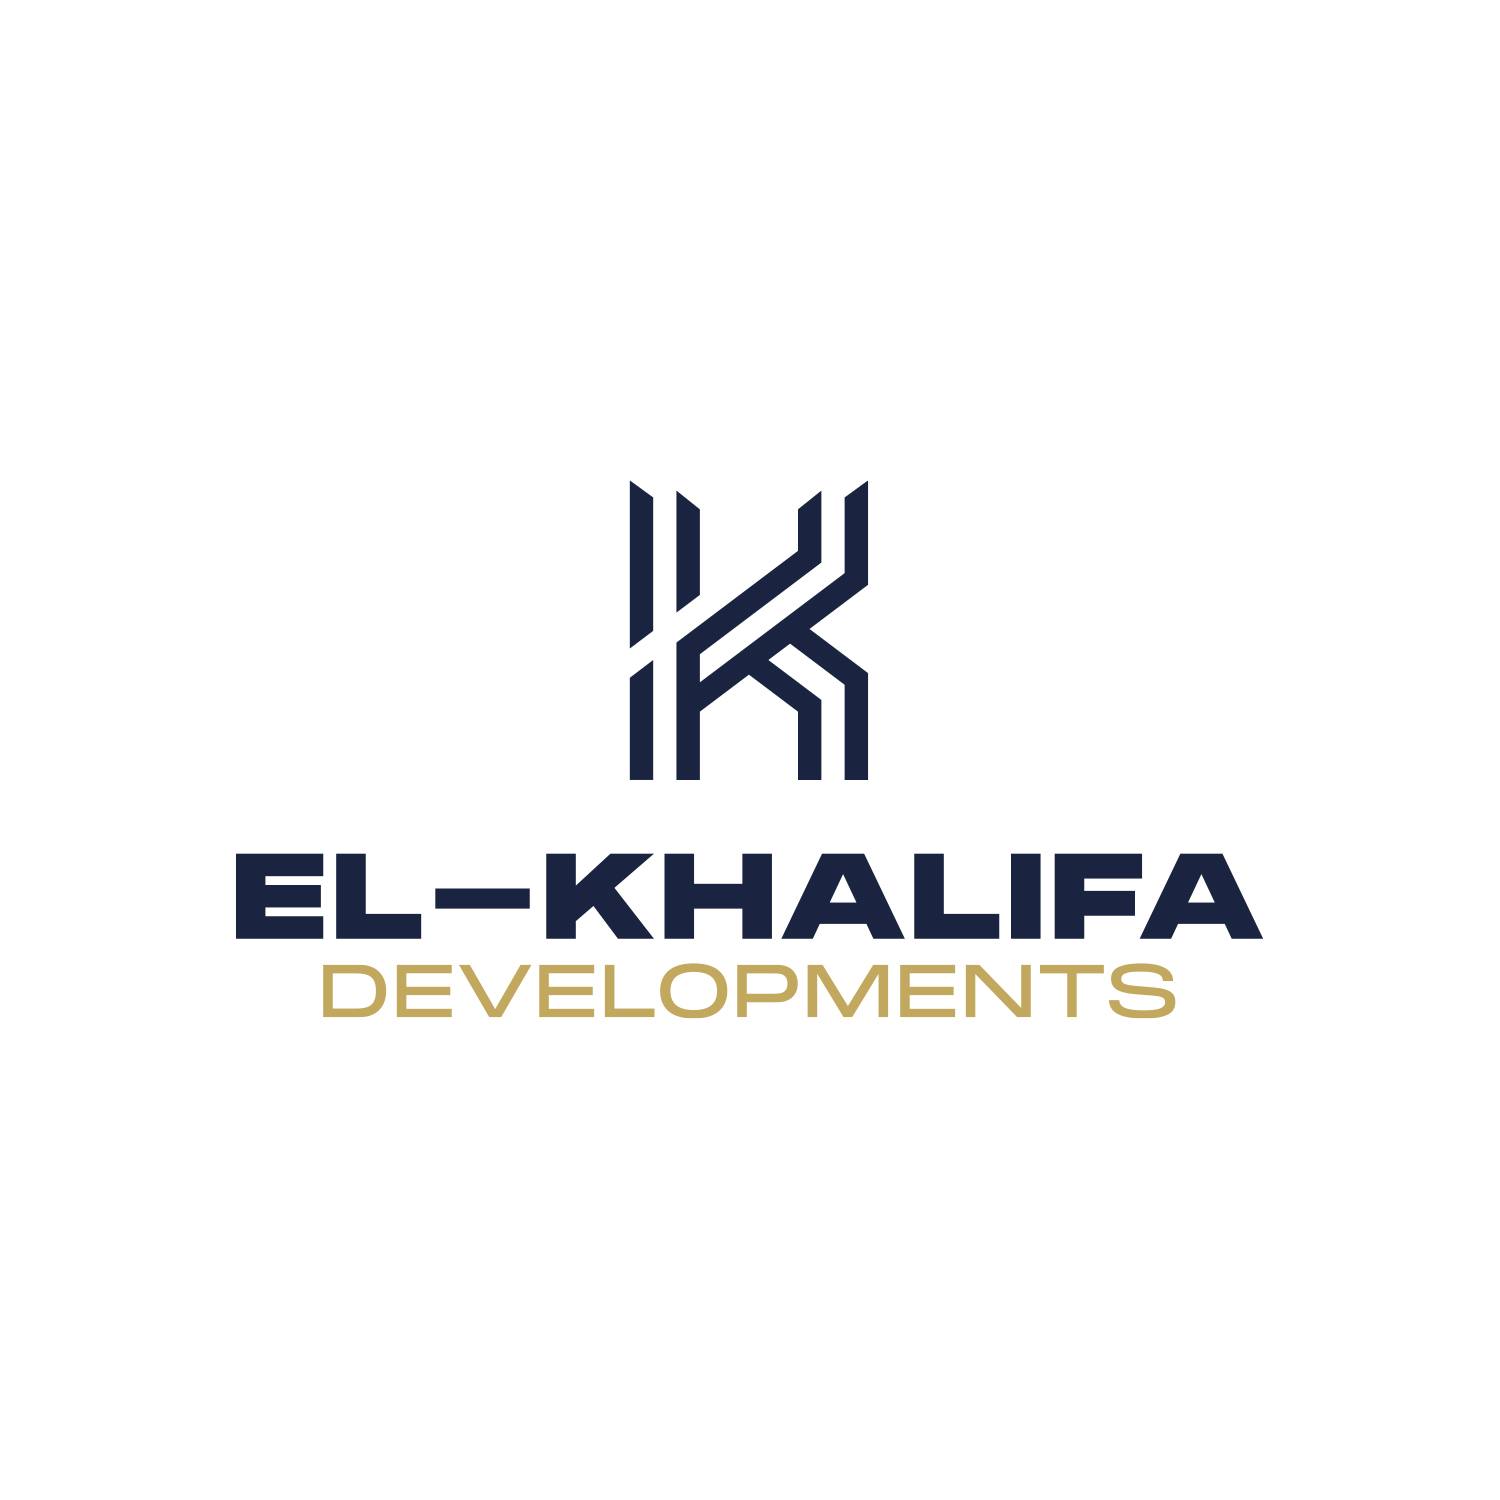 El khalifa developments